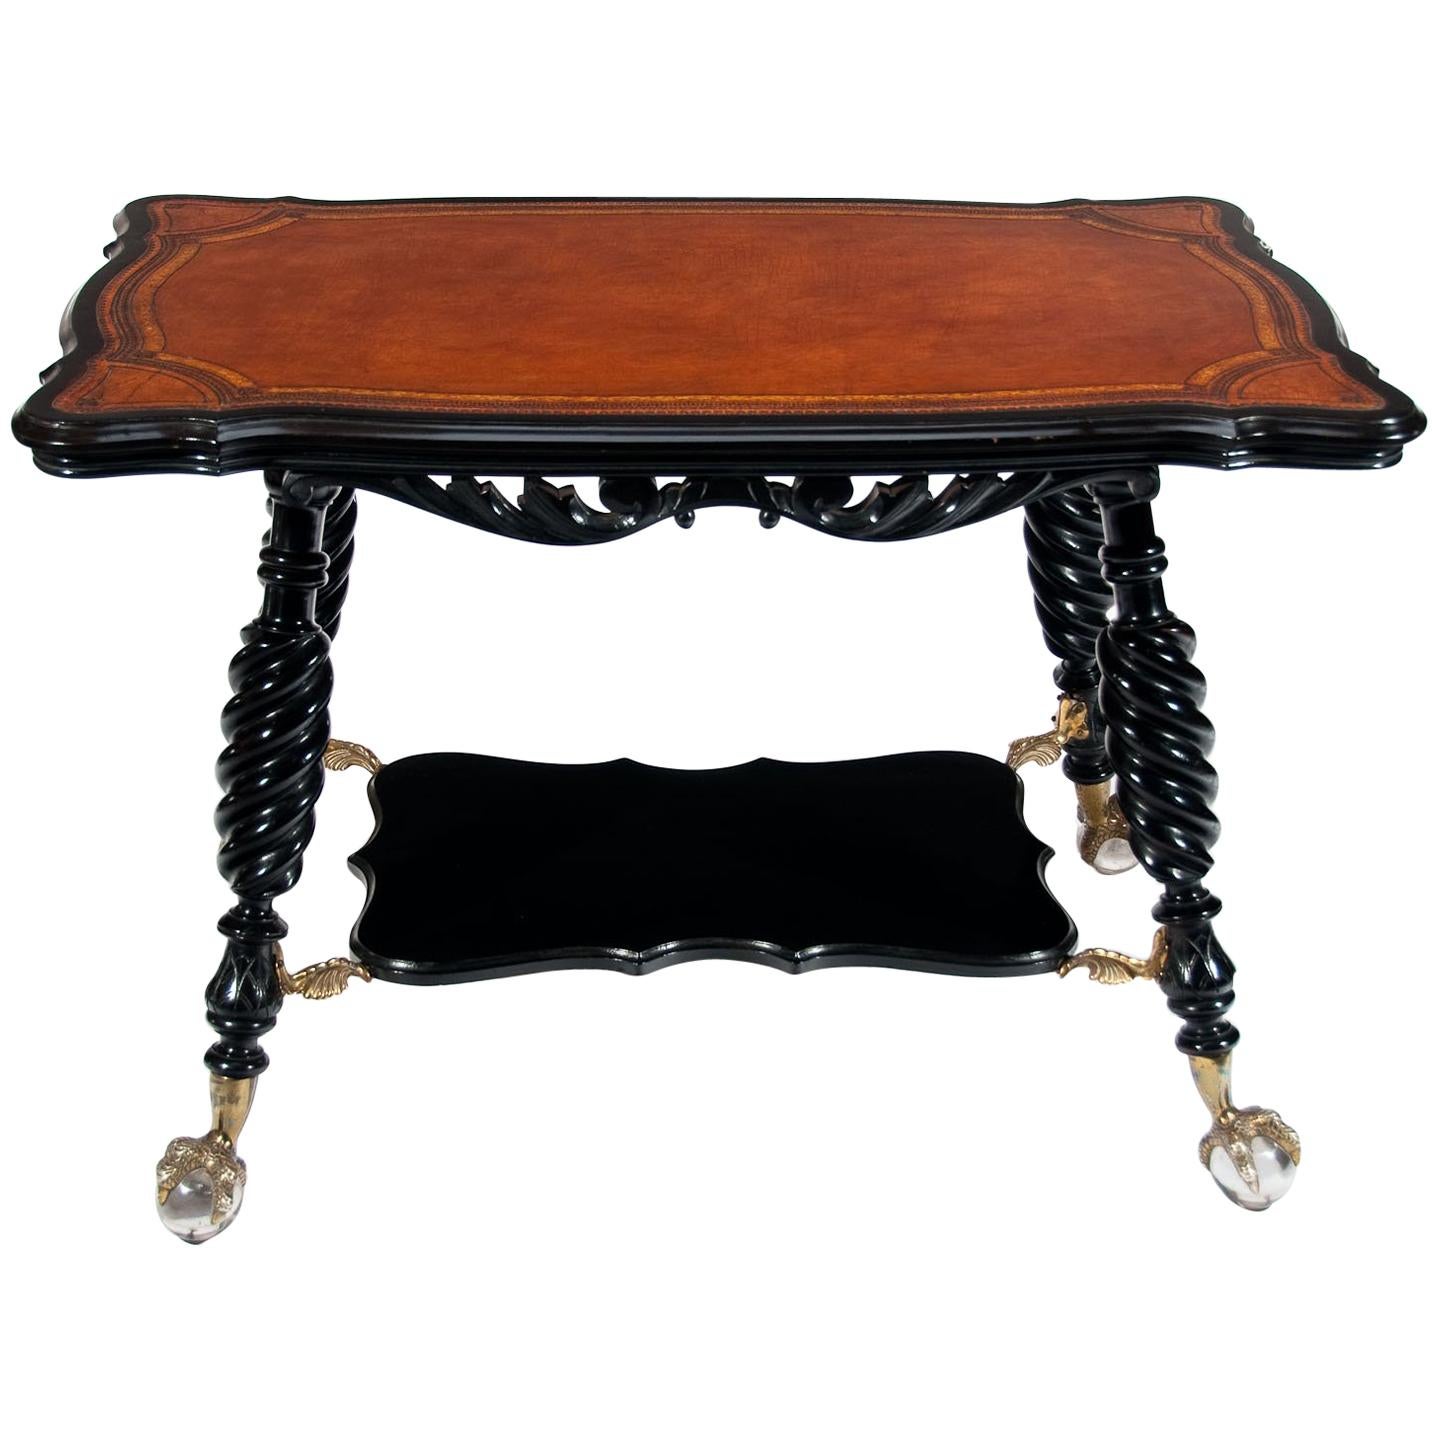 Unusual Antique Ebonized and Leathered Table